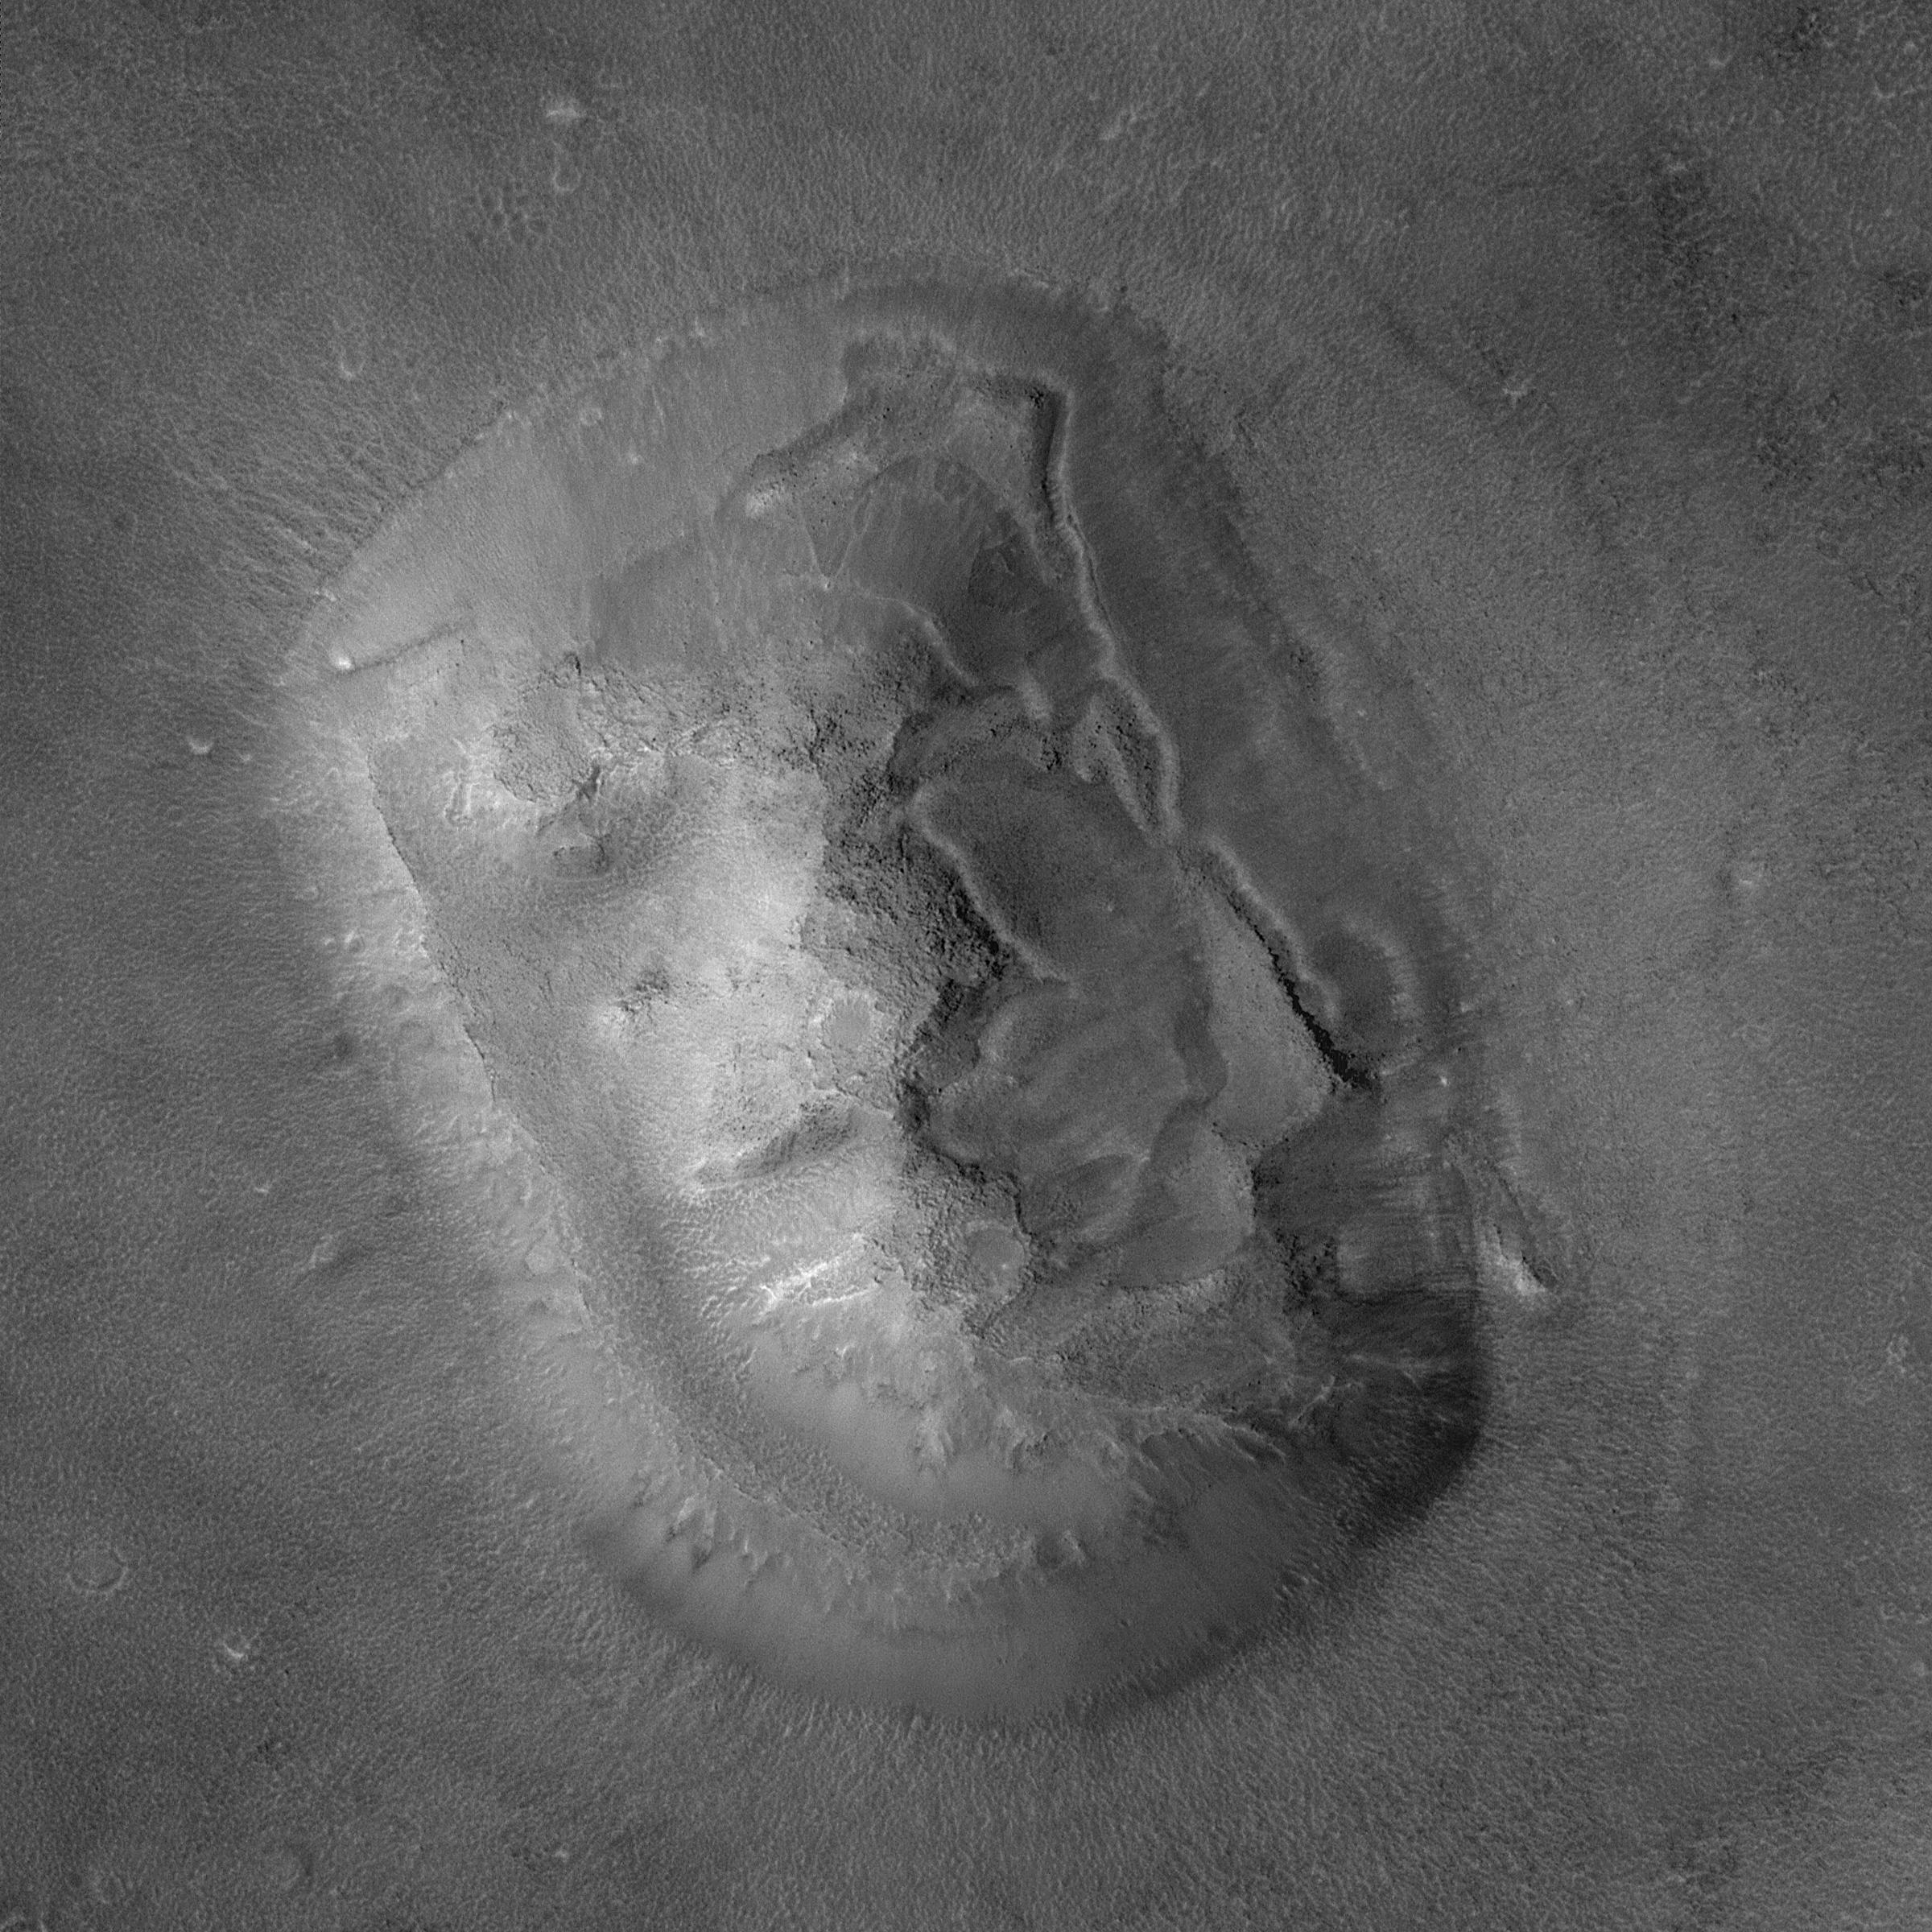 Highest-Resolution View of "Face on Mars" – NASA Mars Exploration